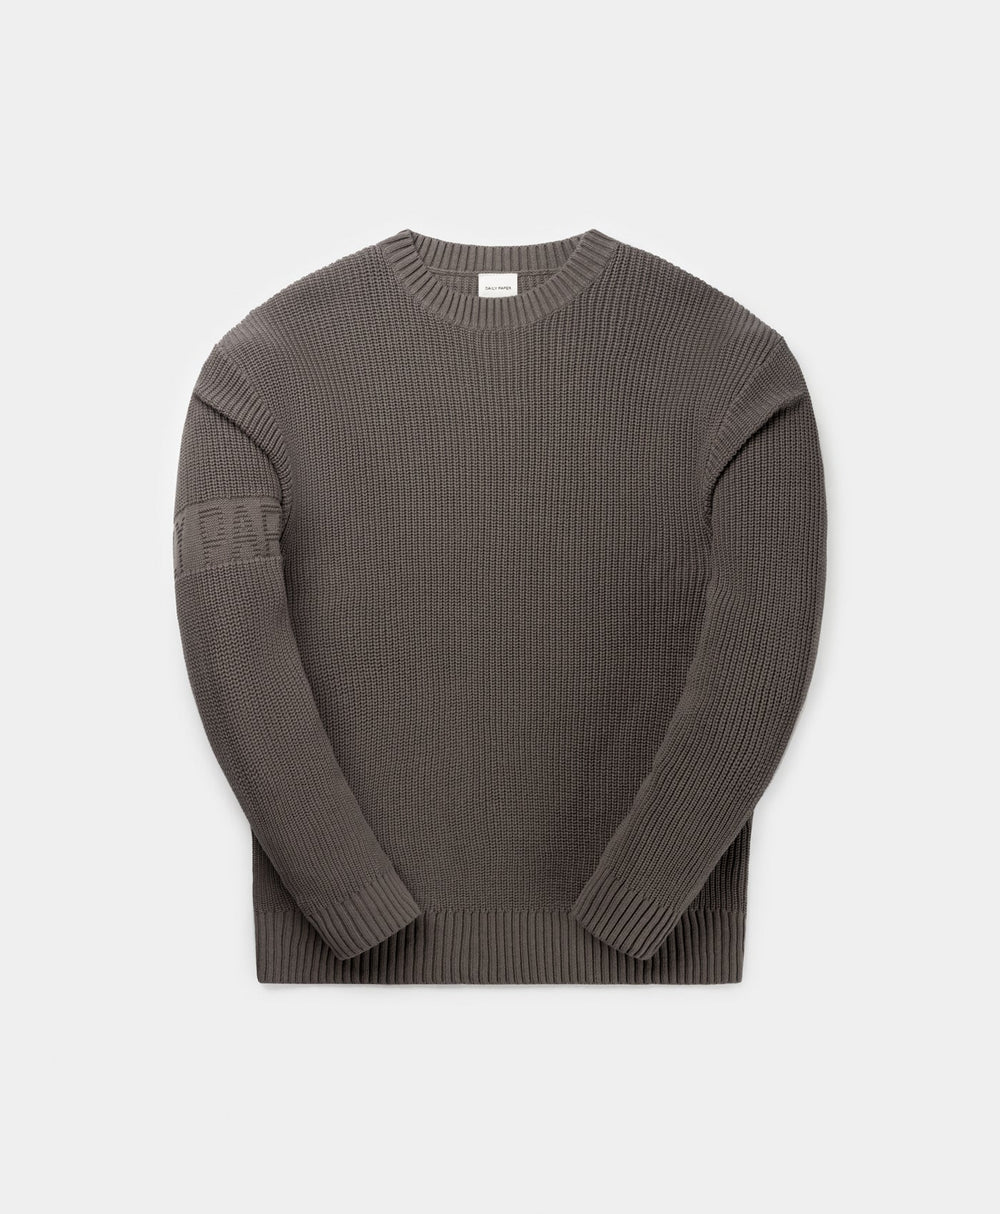 DP - Rabbit Grey Band Knit Sweater - Packshot - front 